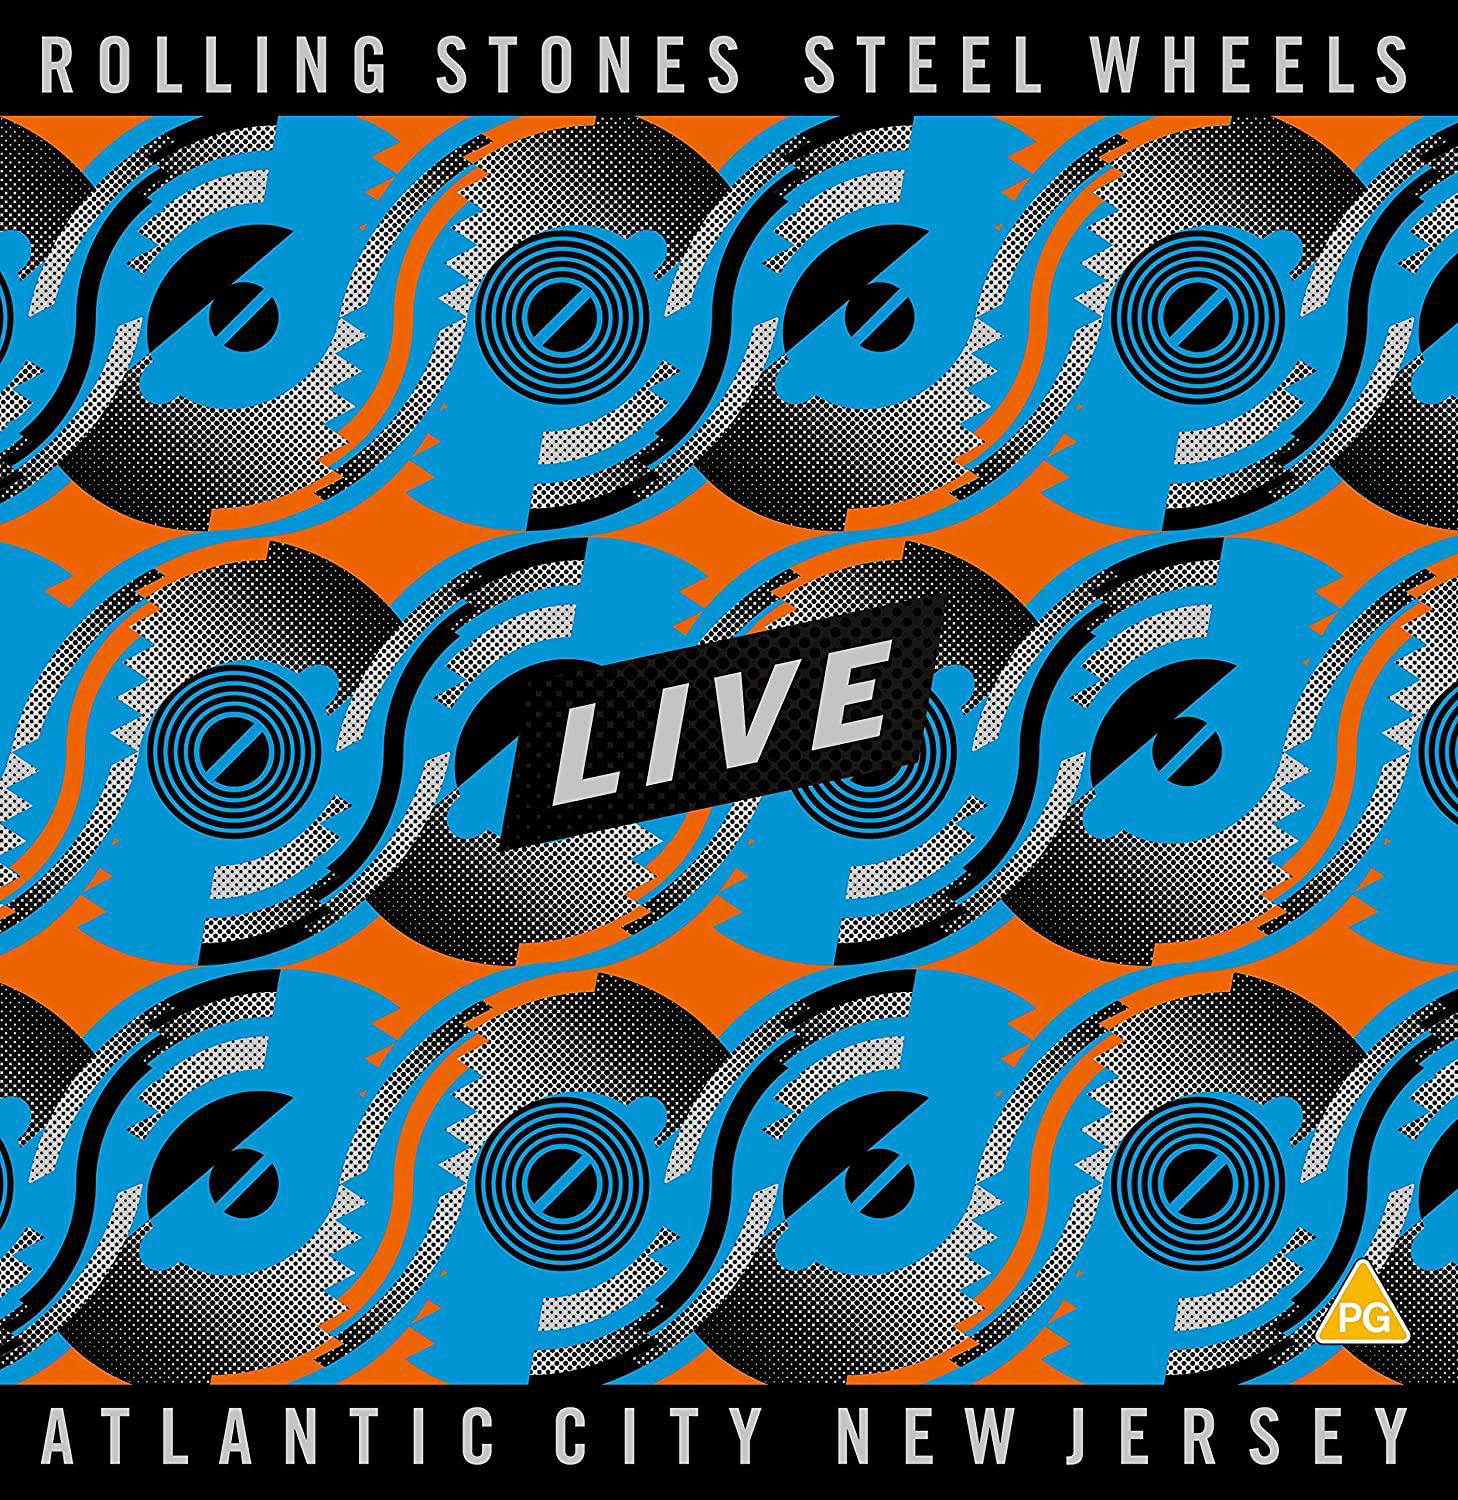 1989,Blu-Ray) City Steel Live Rolling Stones - Wheels - The (Atlantic (Blu-ray)